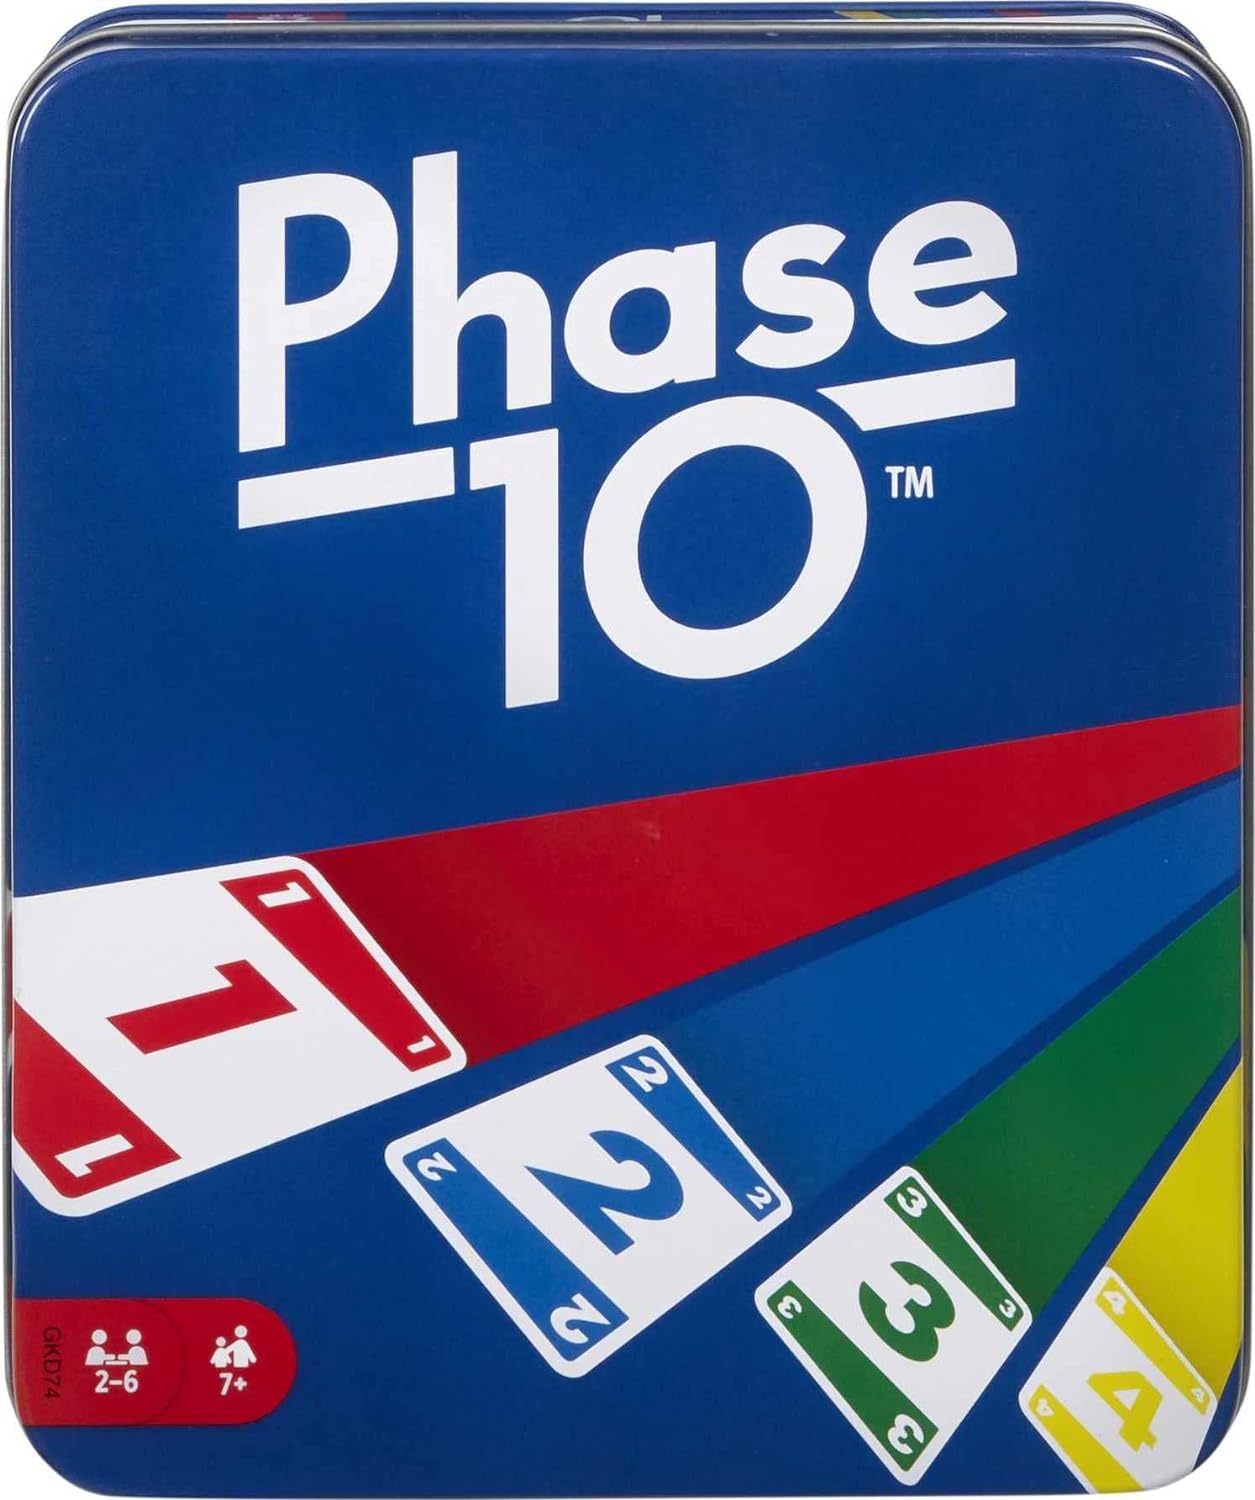 Phase 10 card game in tin box - $7.49